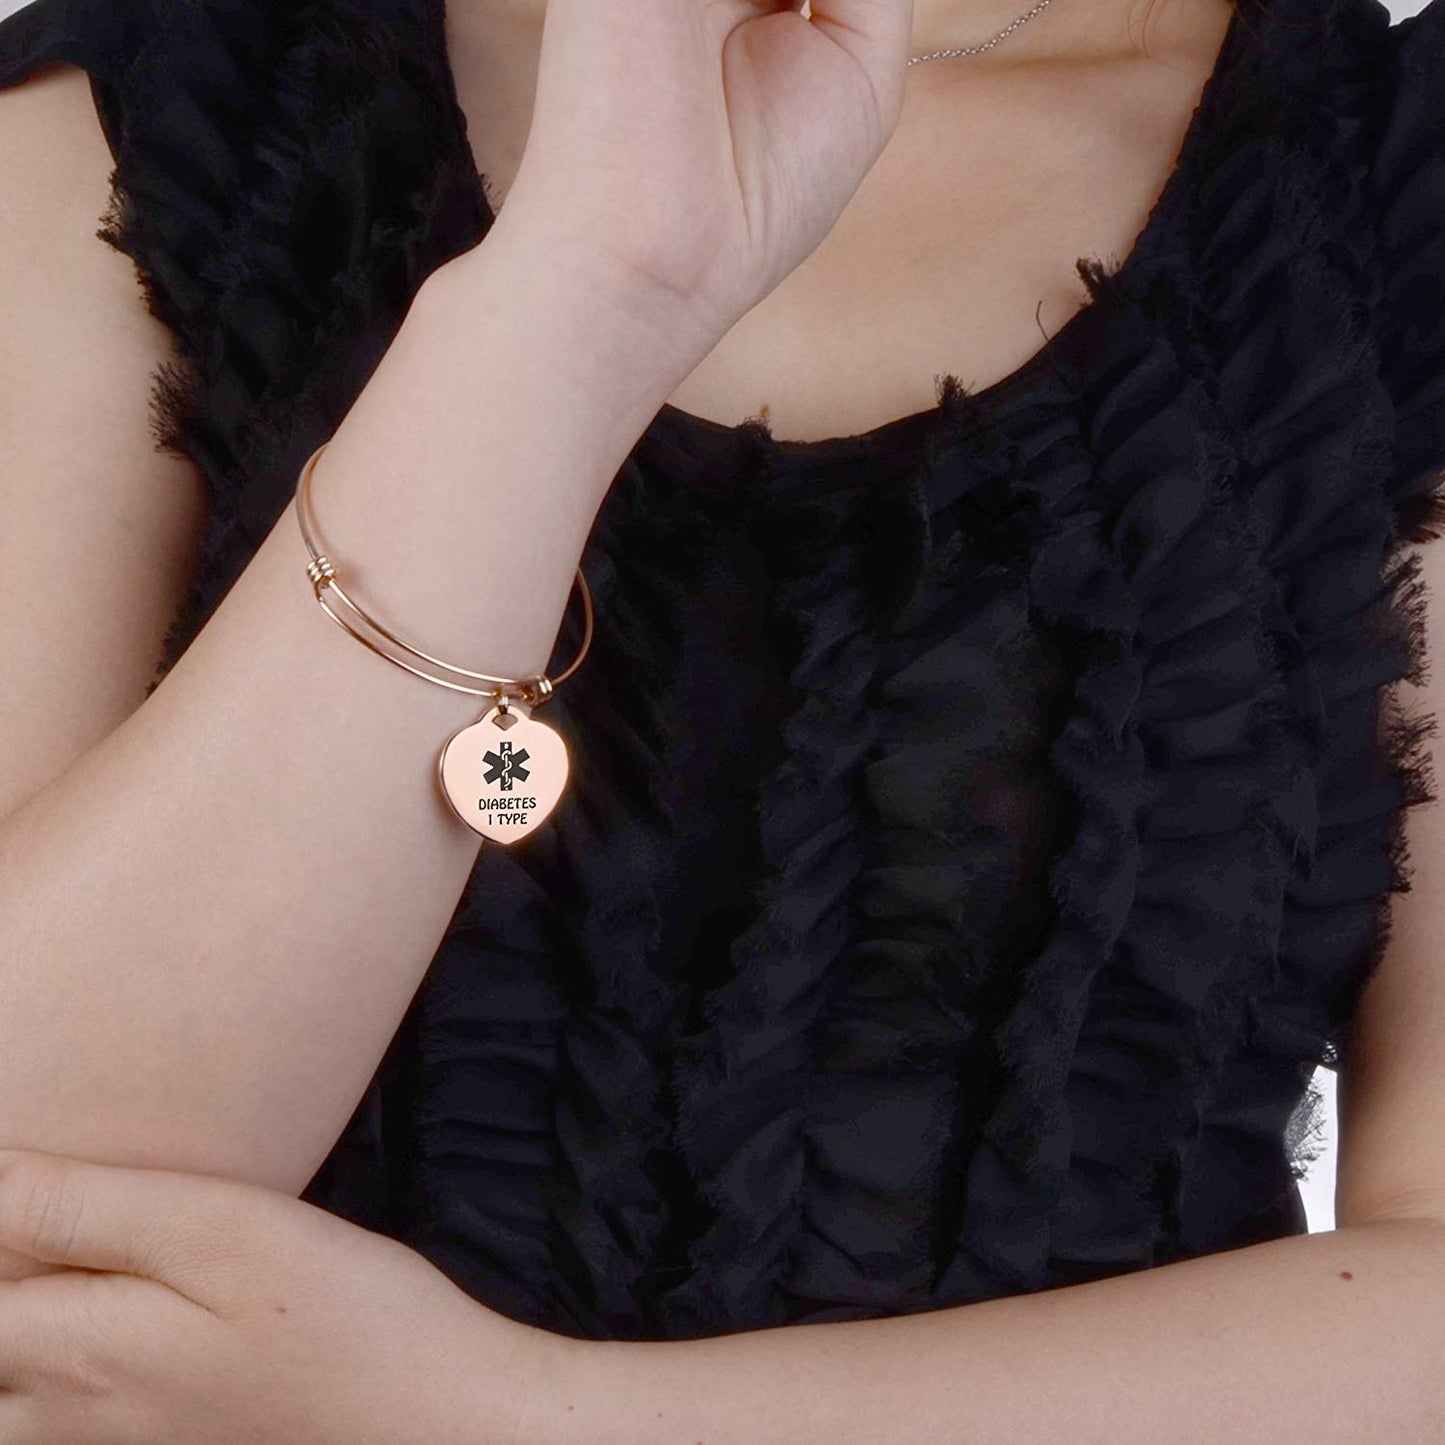 LinnaLove Fashion Stainless steel Expandable bangle medical alert id bracelet for women